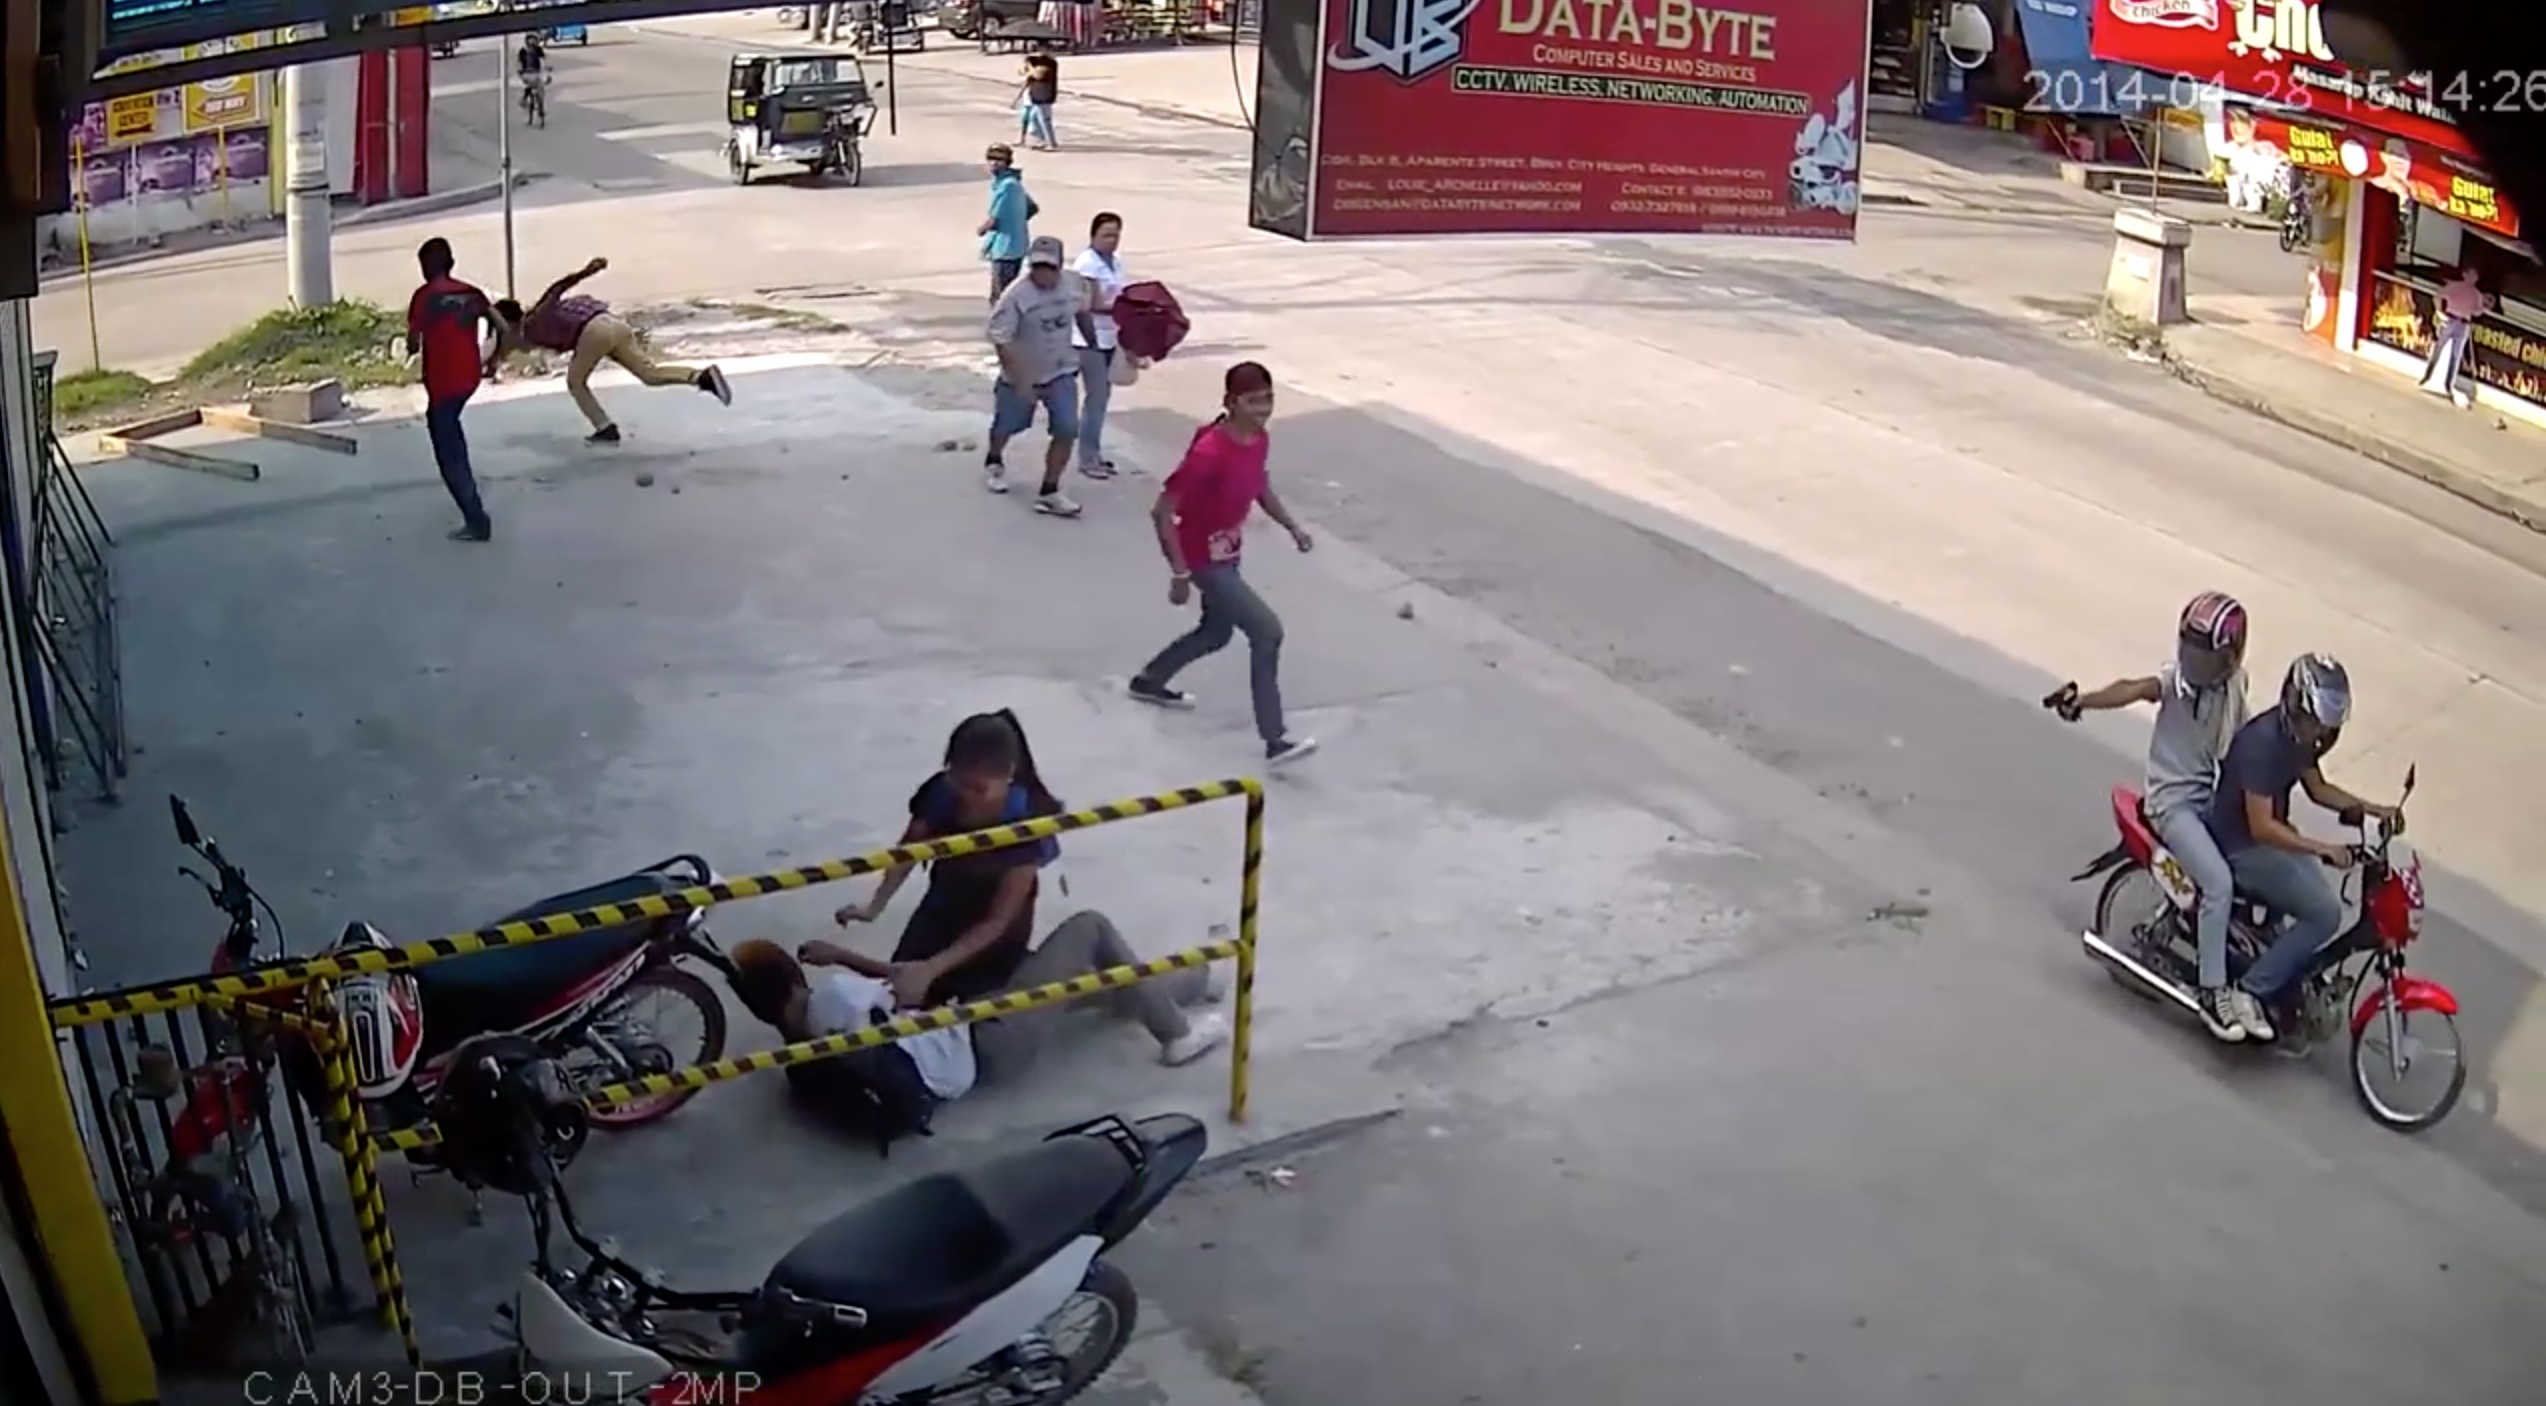 Camera filme un jeune se faire descendre par un scooter